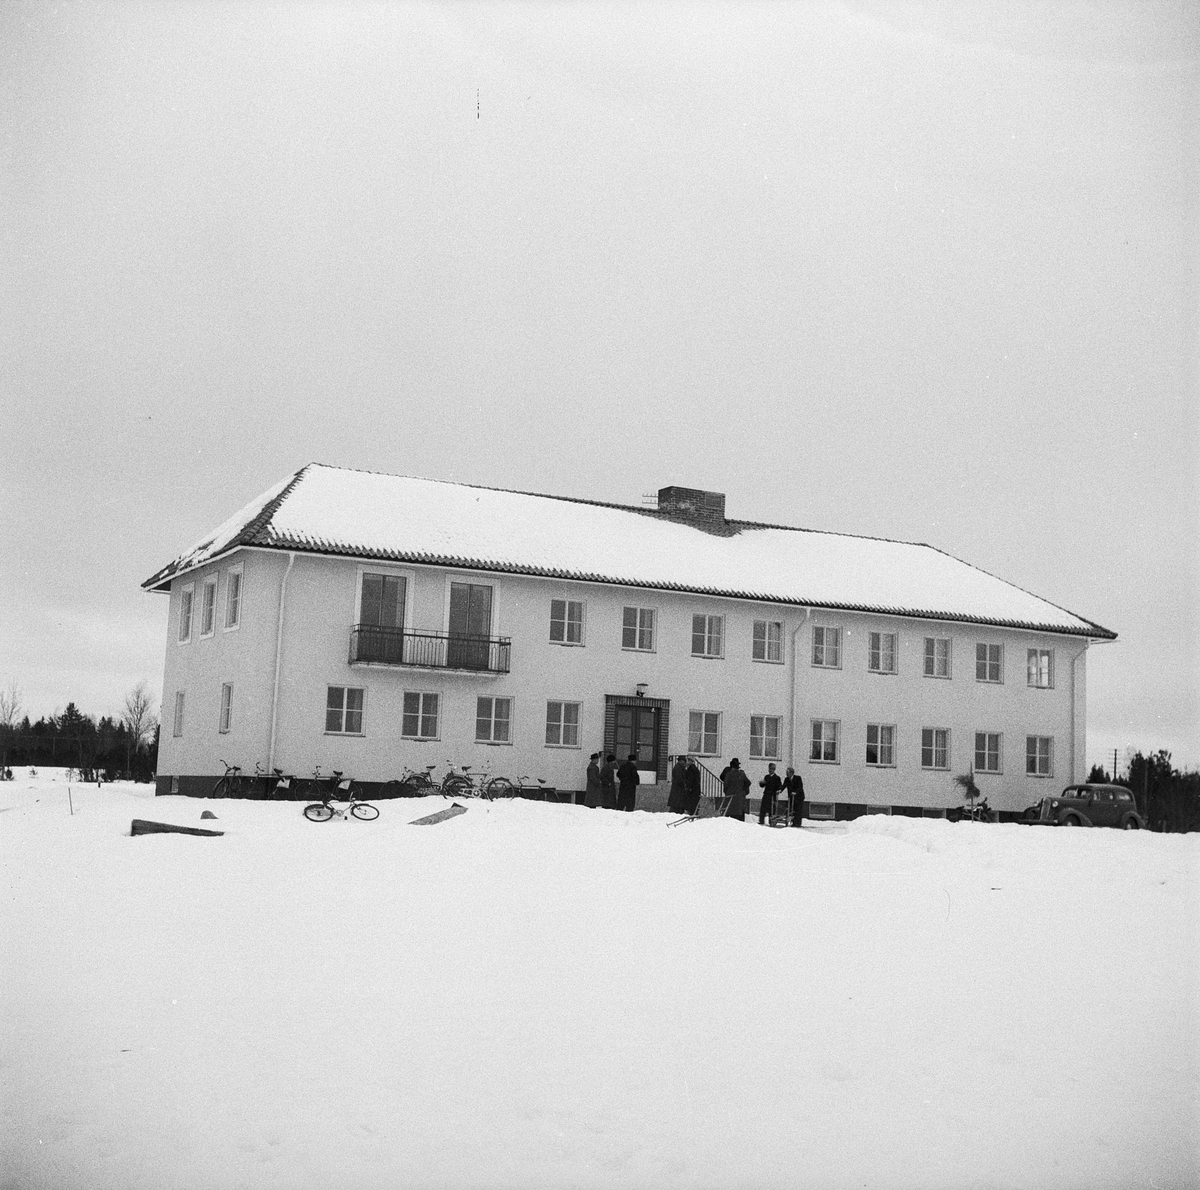 Kommunalhuset, Hållnäs, Uppland